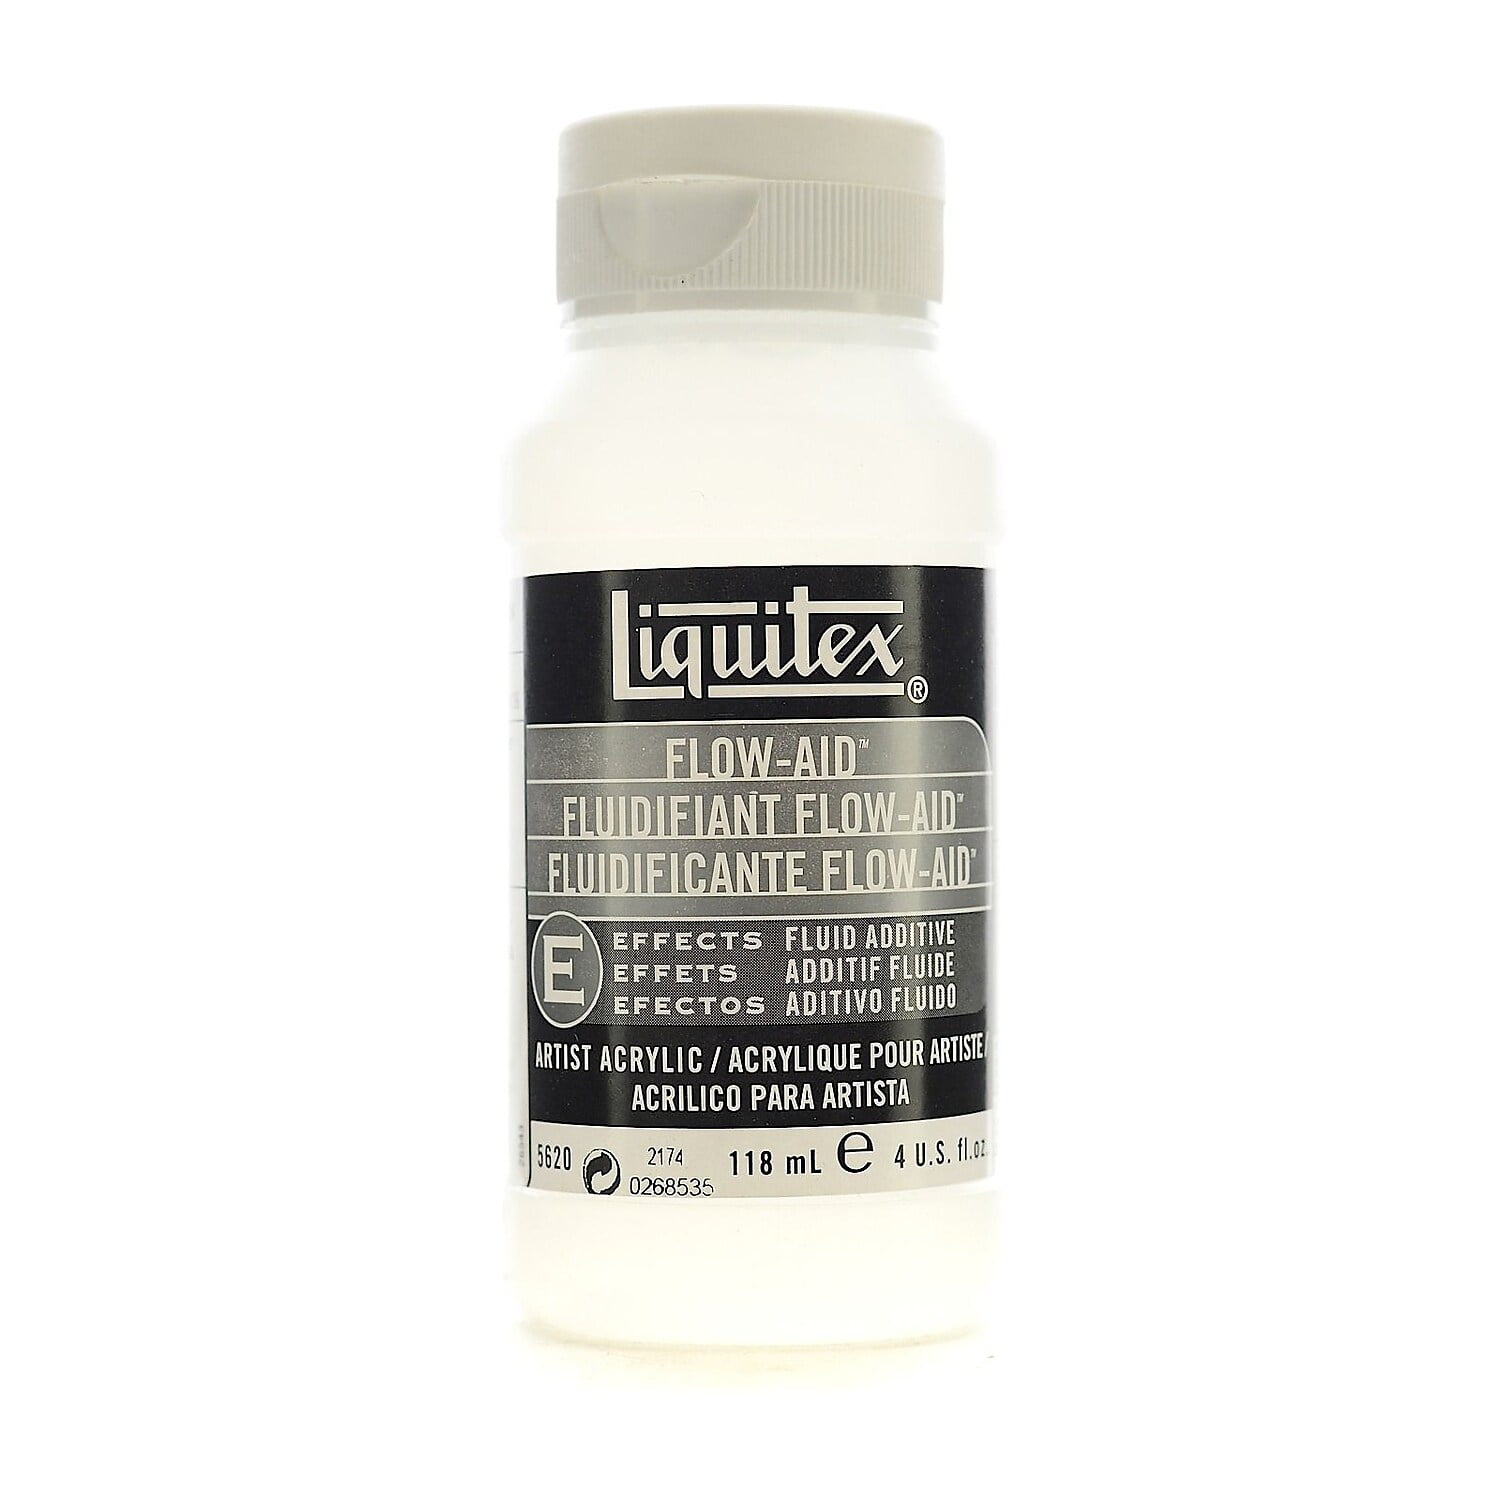 Liquitex Flow Aid Additive - 118ml (4 oz)